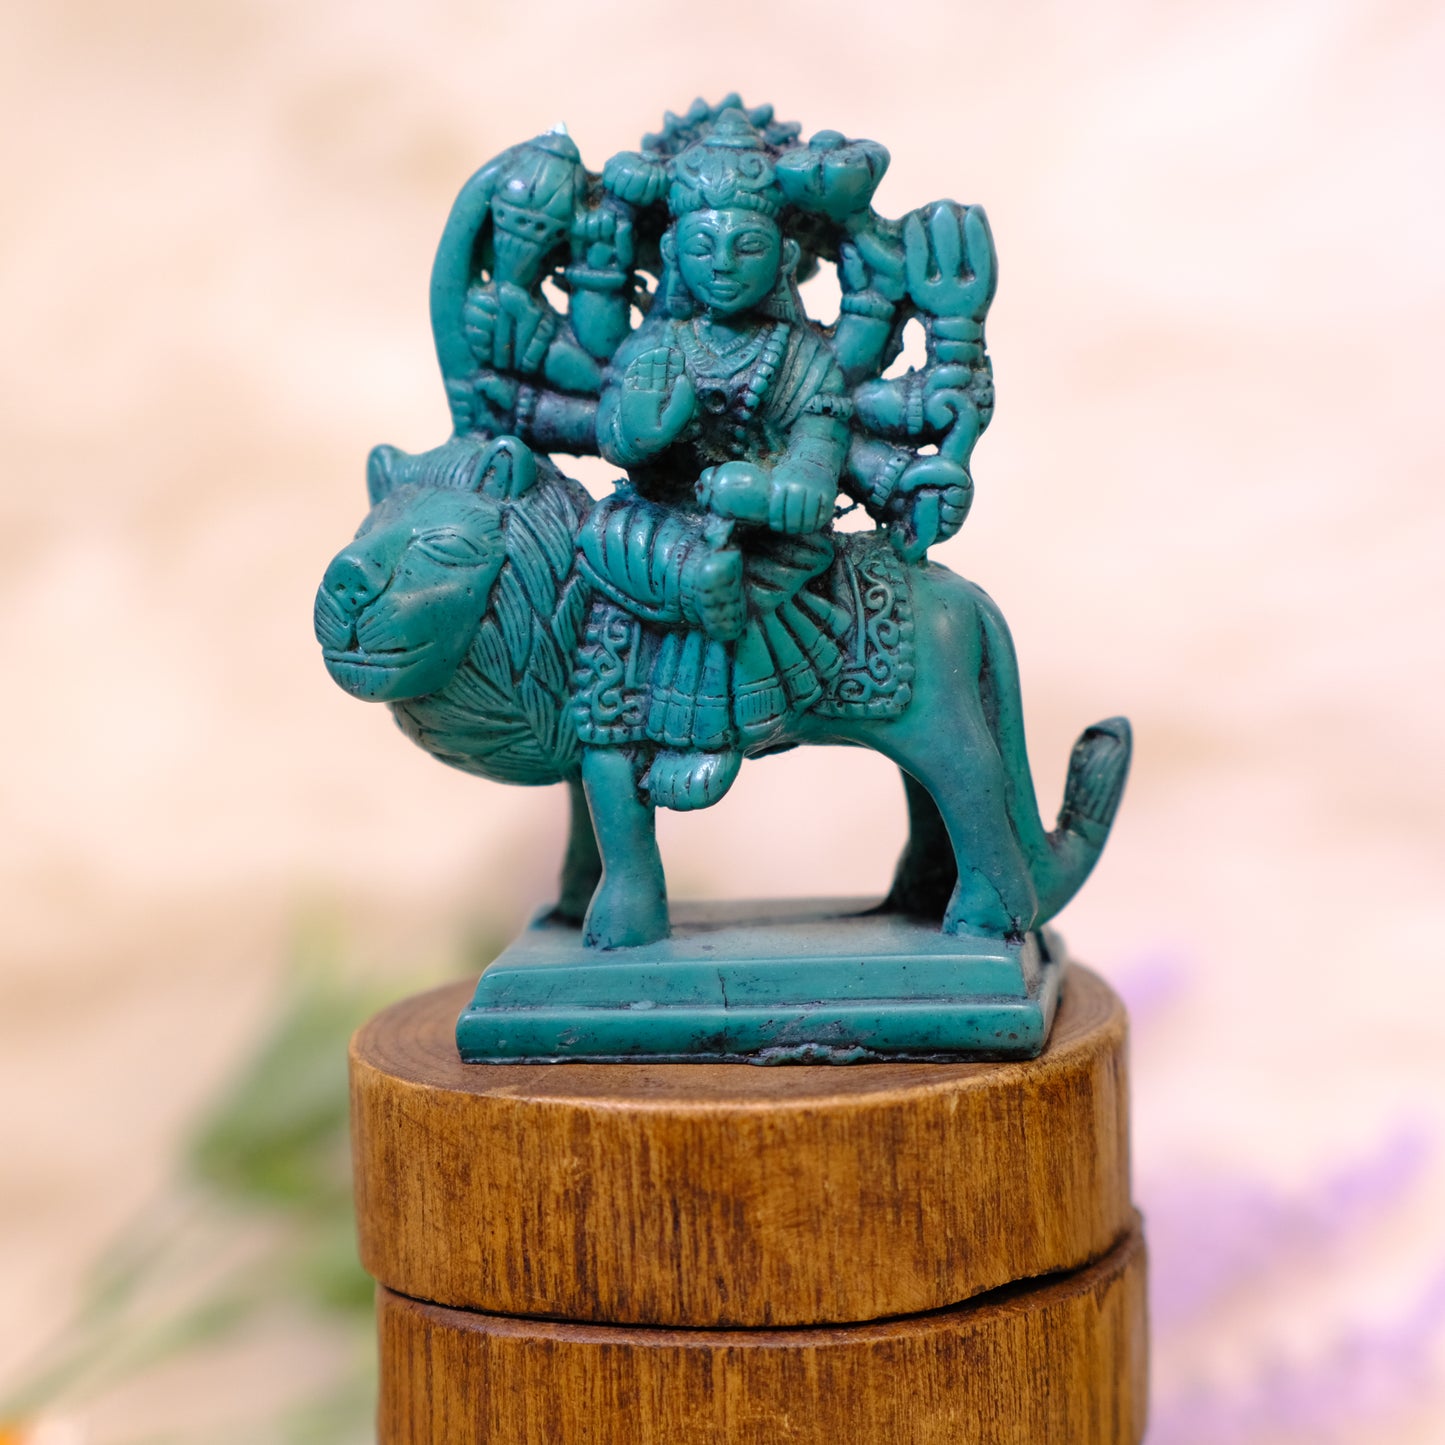 Handmade Durga statue ; the Goddess of Protection